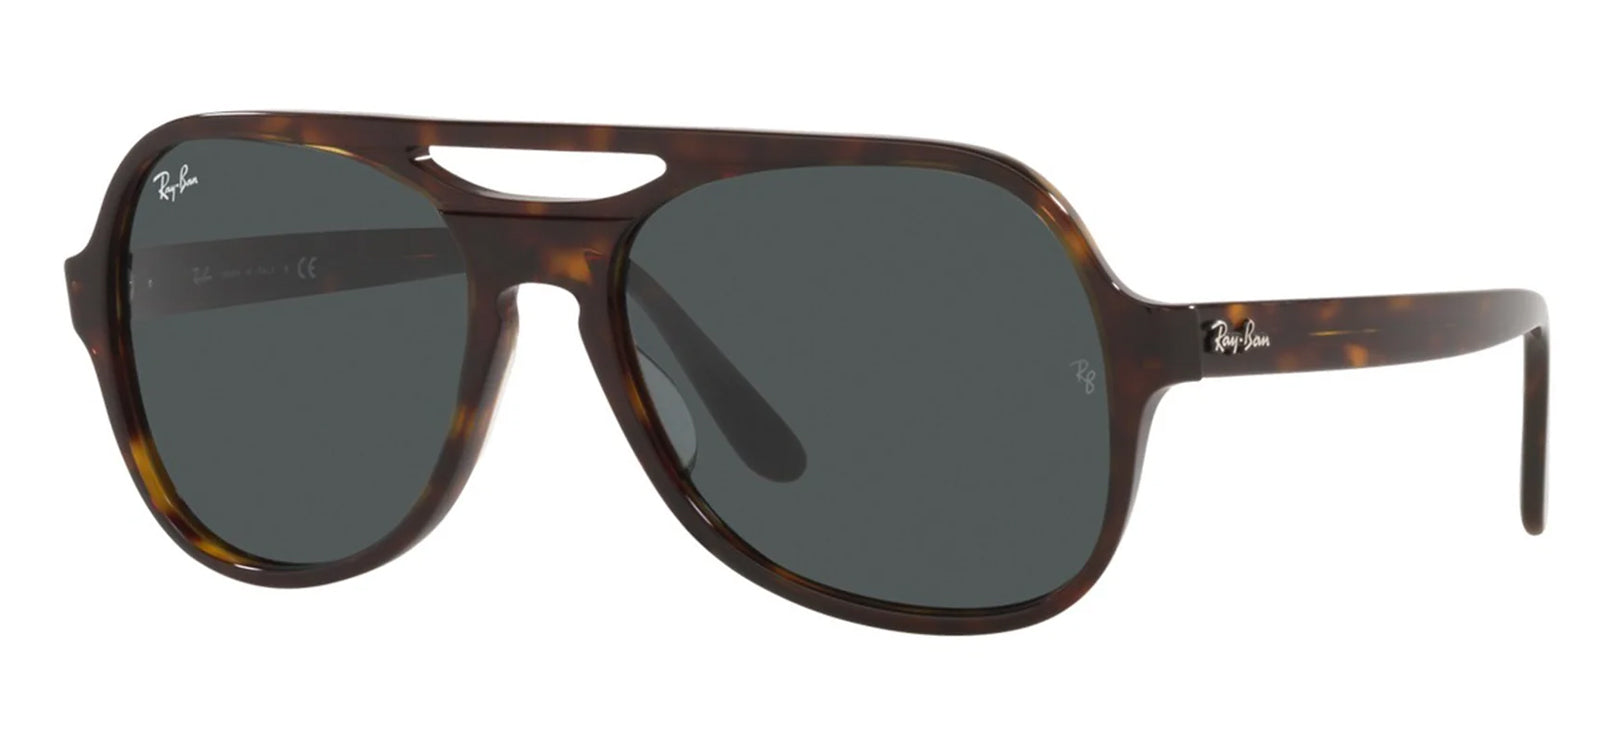 Ray-Ban Powderhorn Adult Aviator Sunglasses